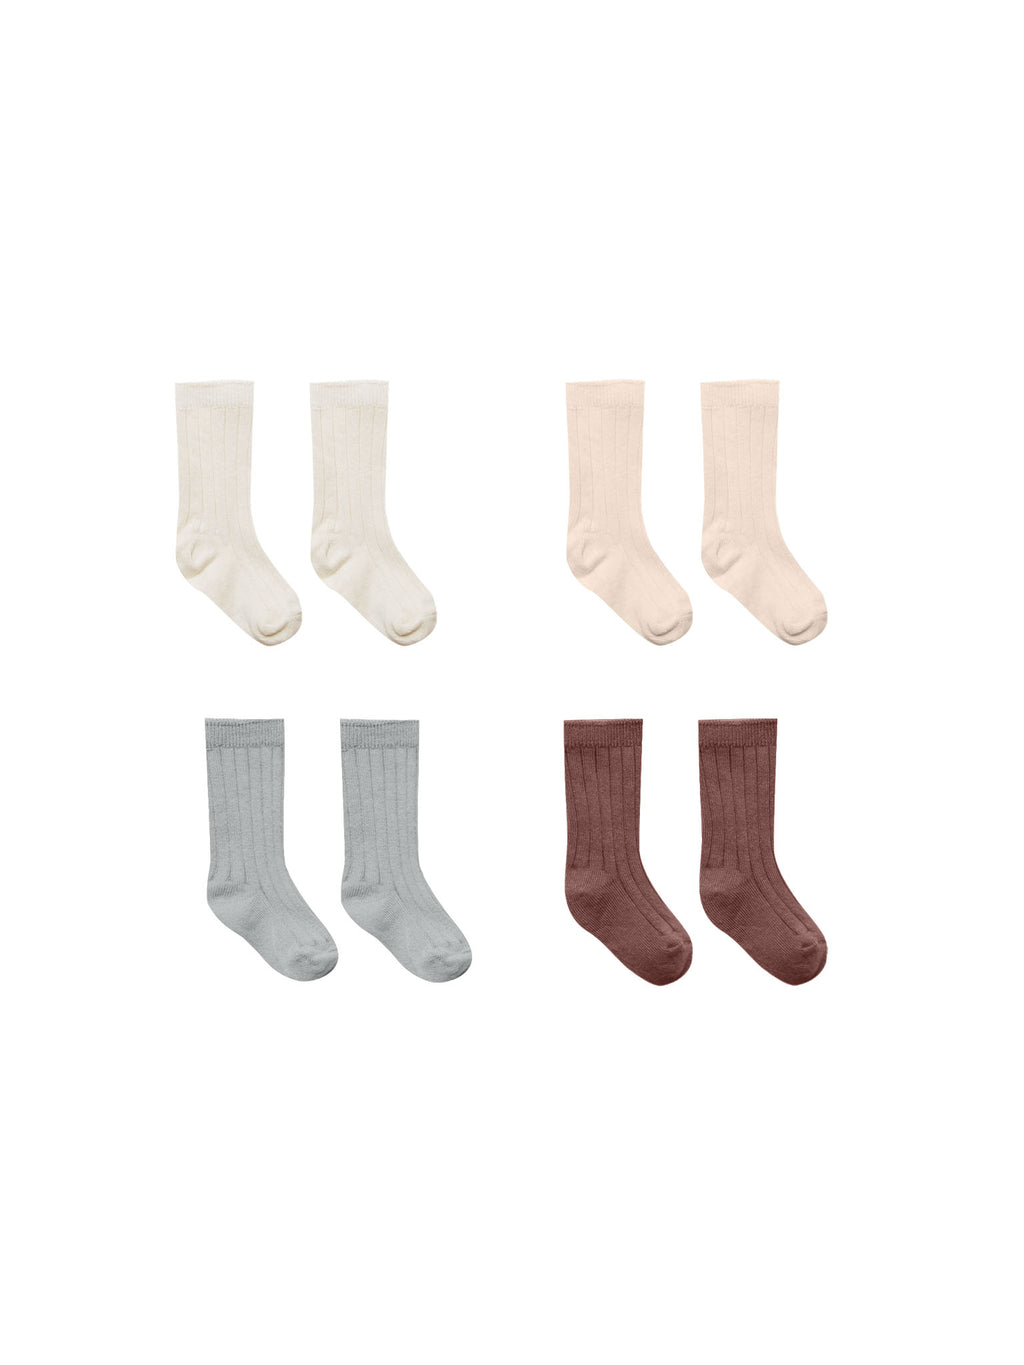 Quincy Mae Socks, Set Of 4 - Ivory, Shell, Dusty Blue,Plum